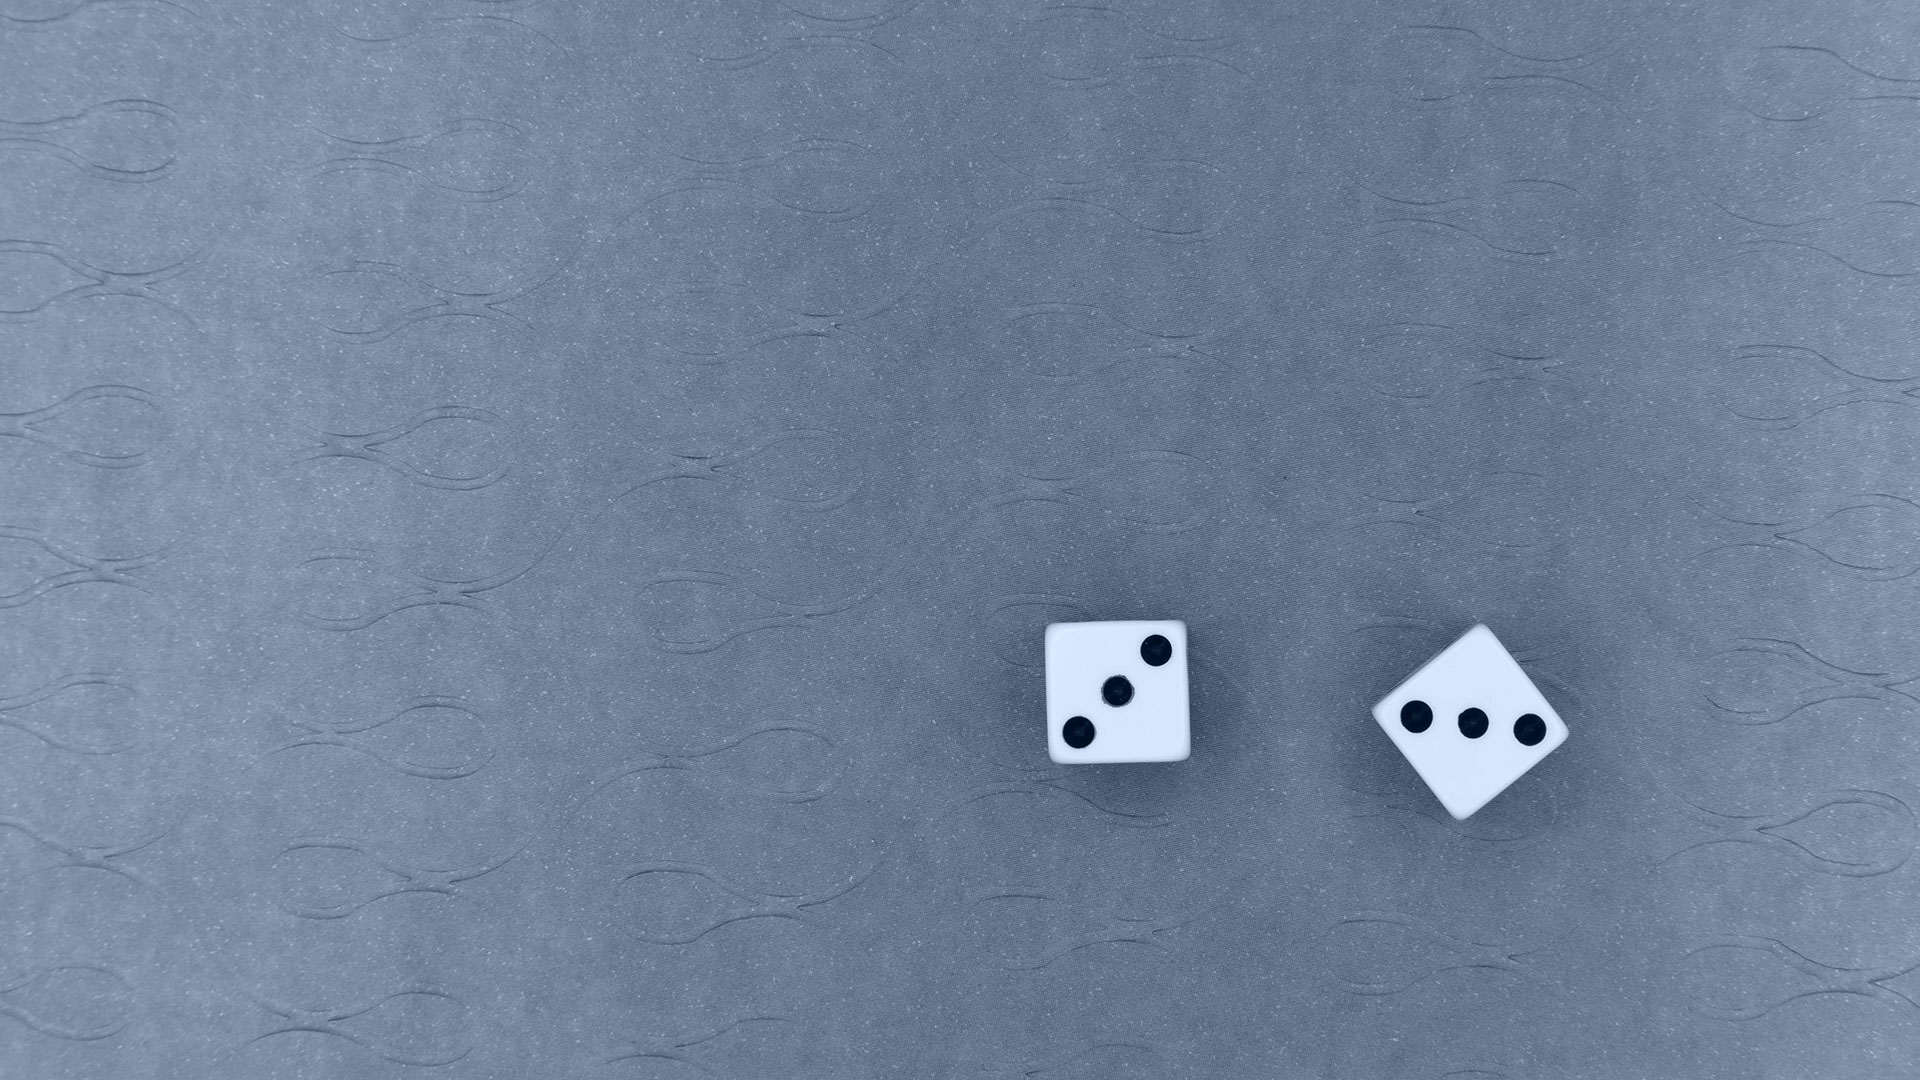 Double 3 on dice.